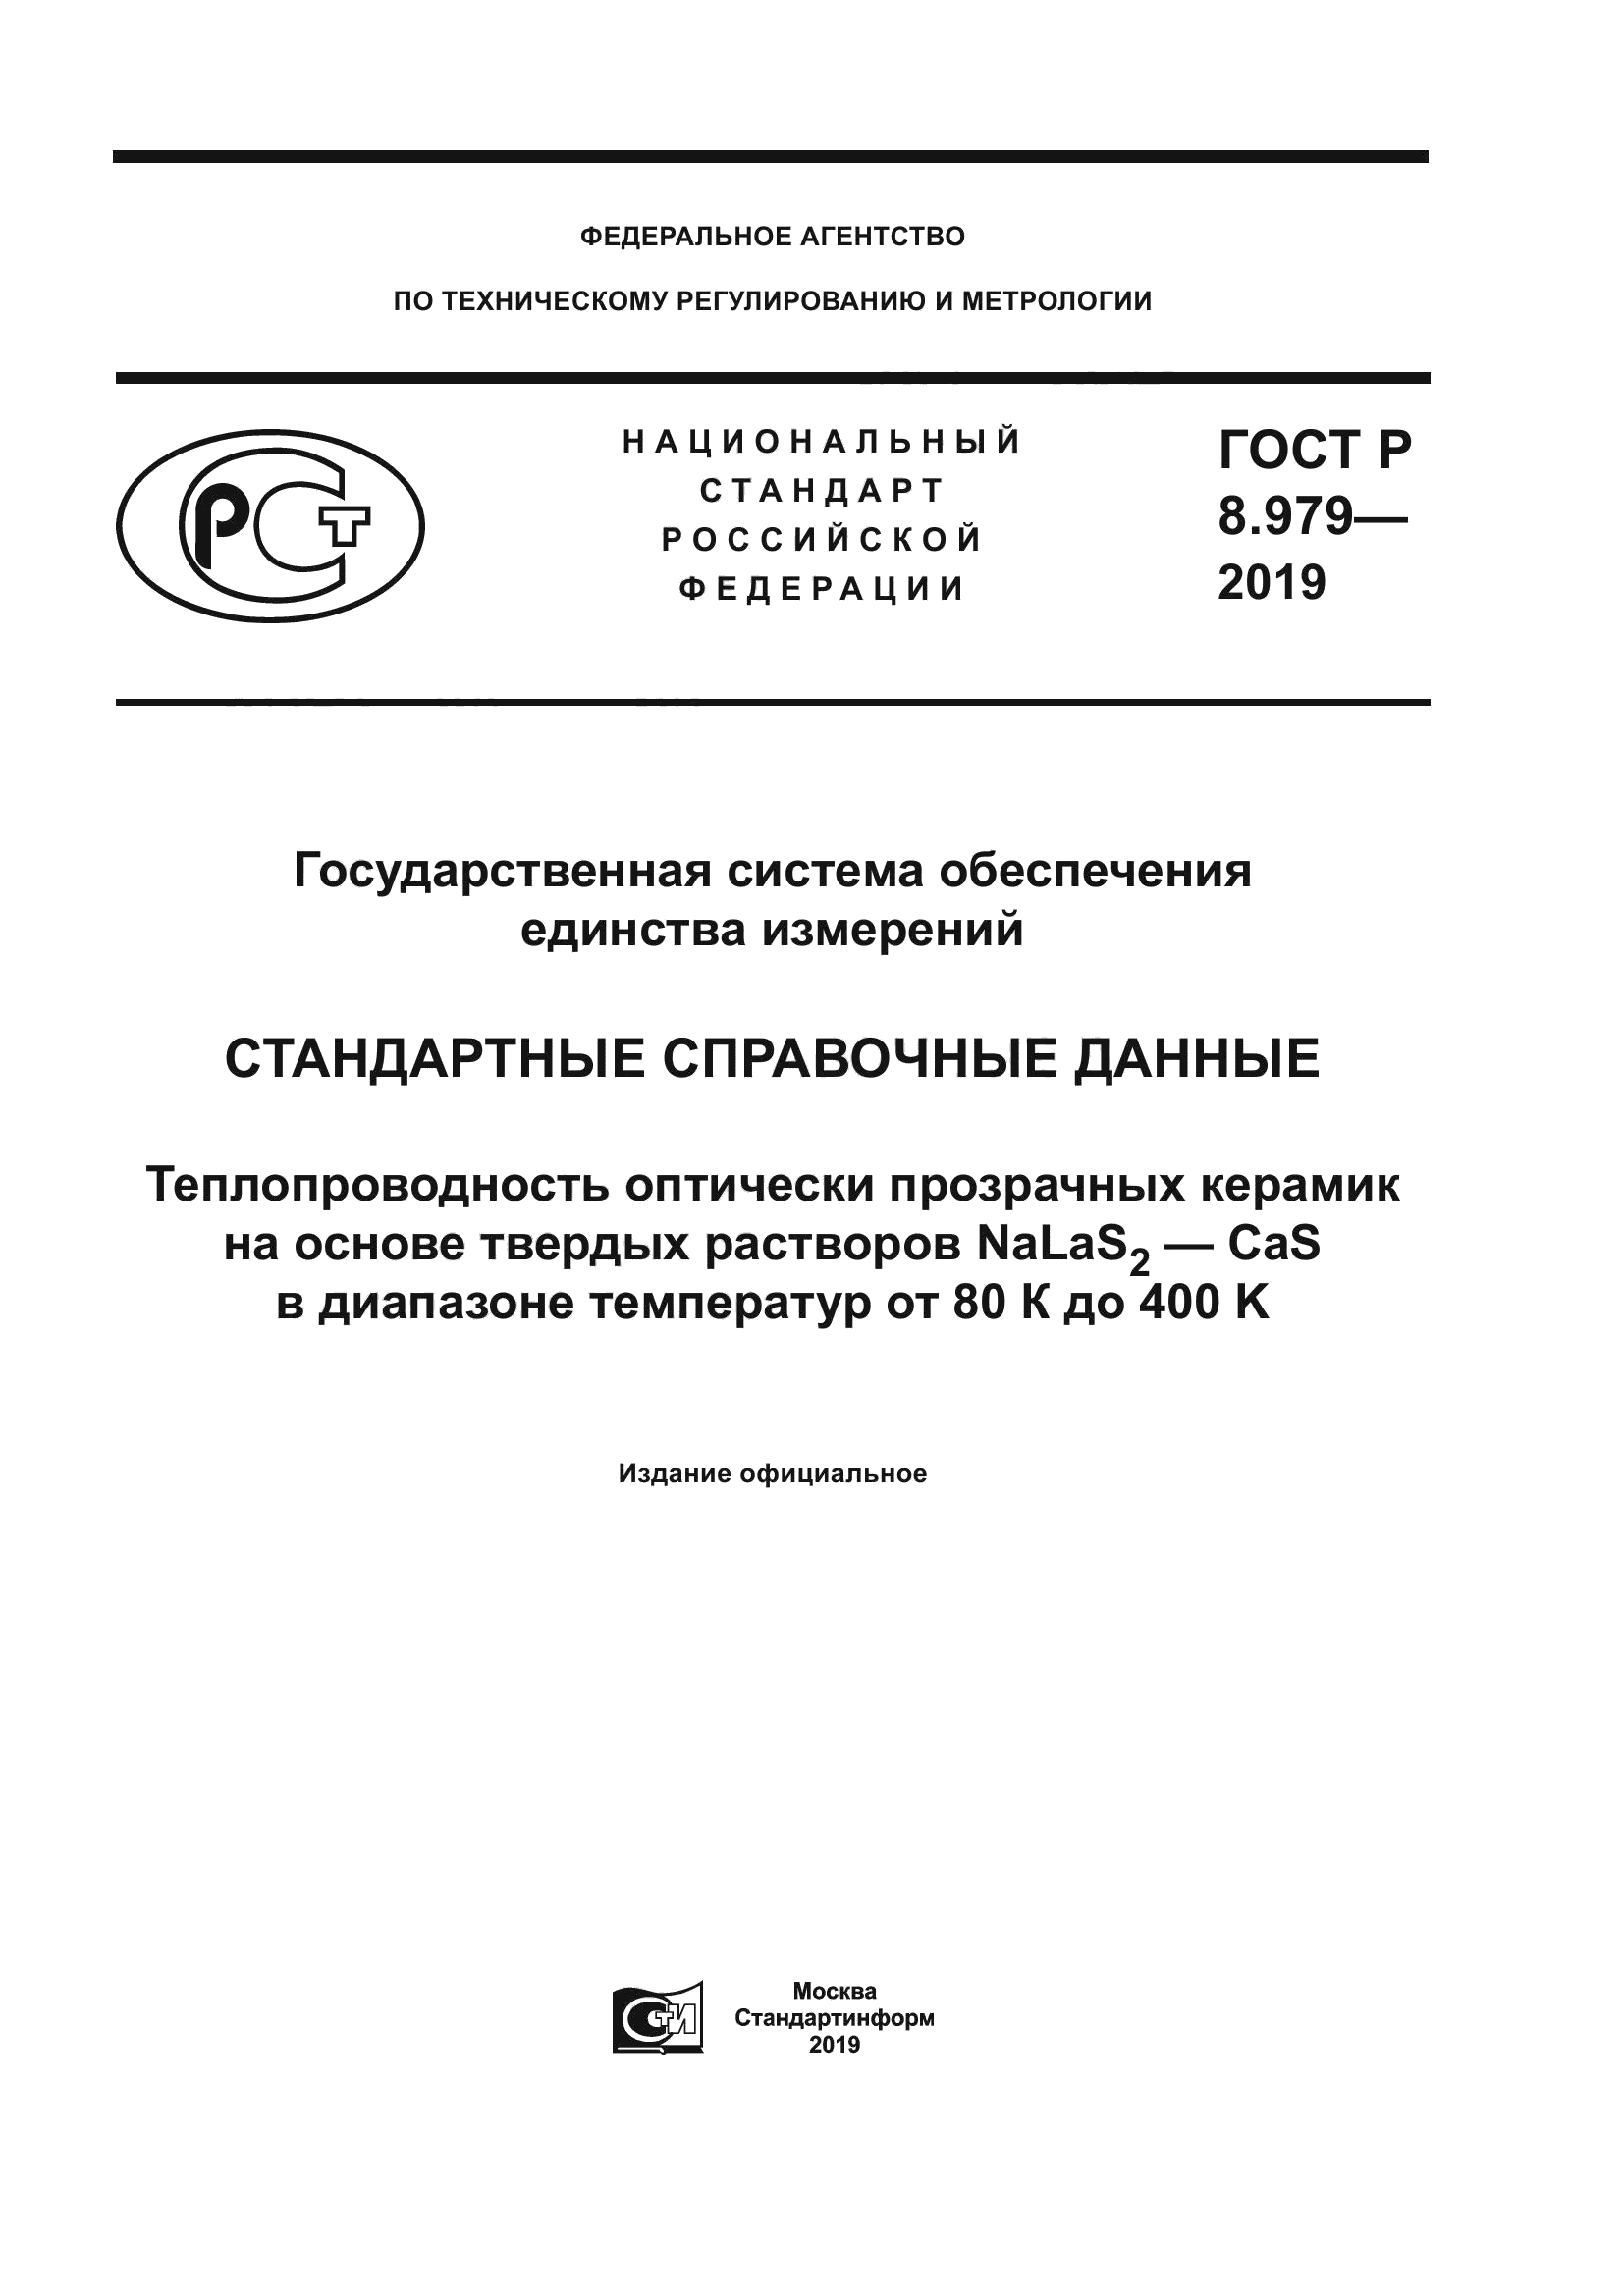 ГОСТ Р 8.979-2019